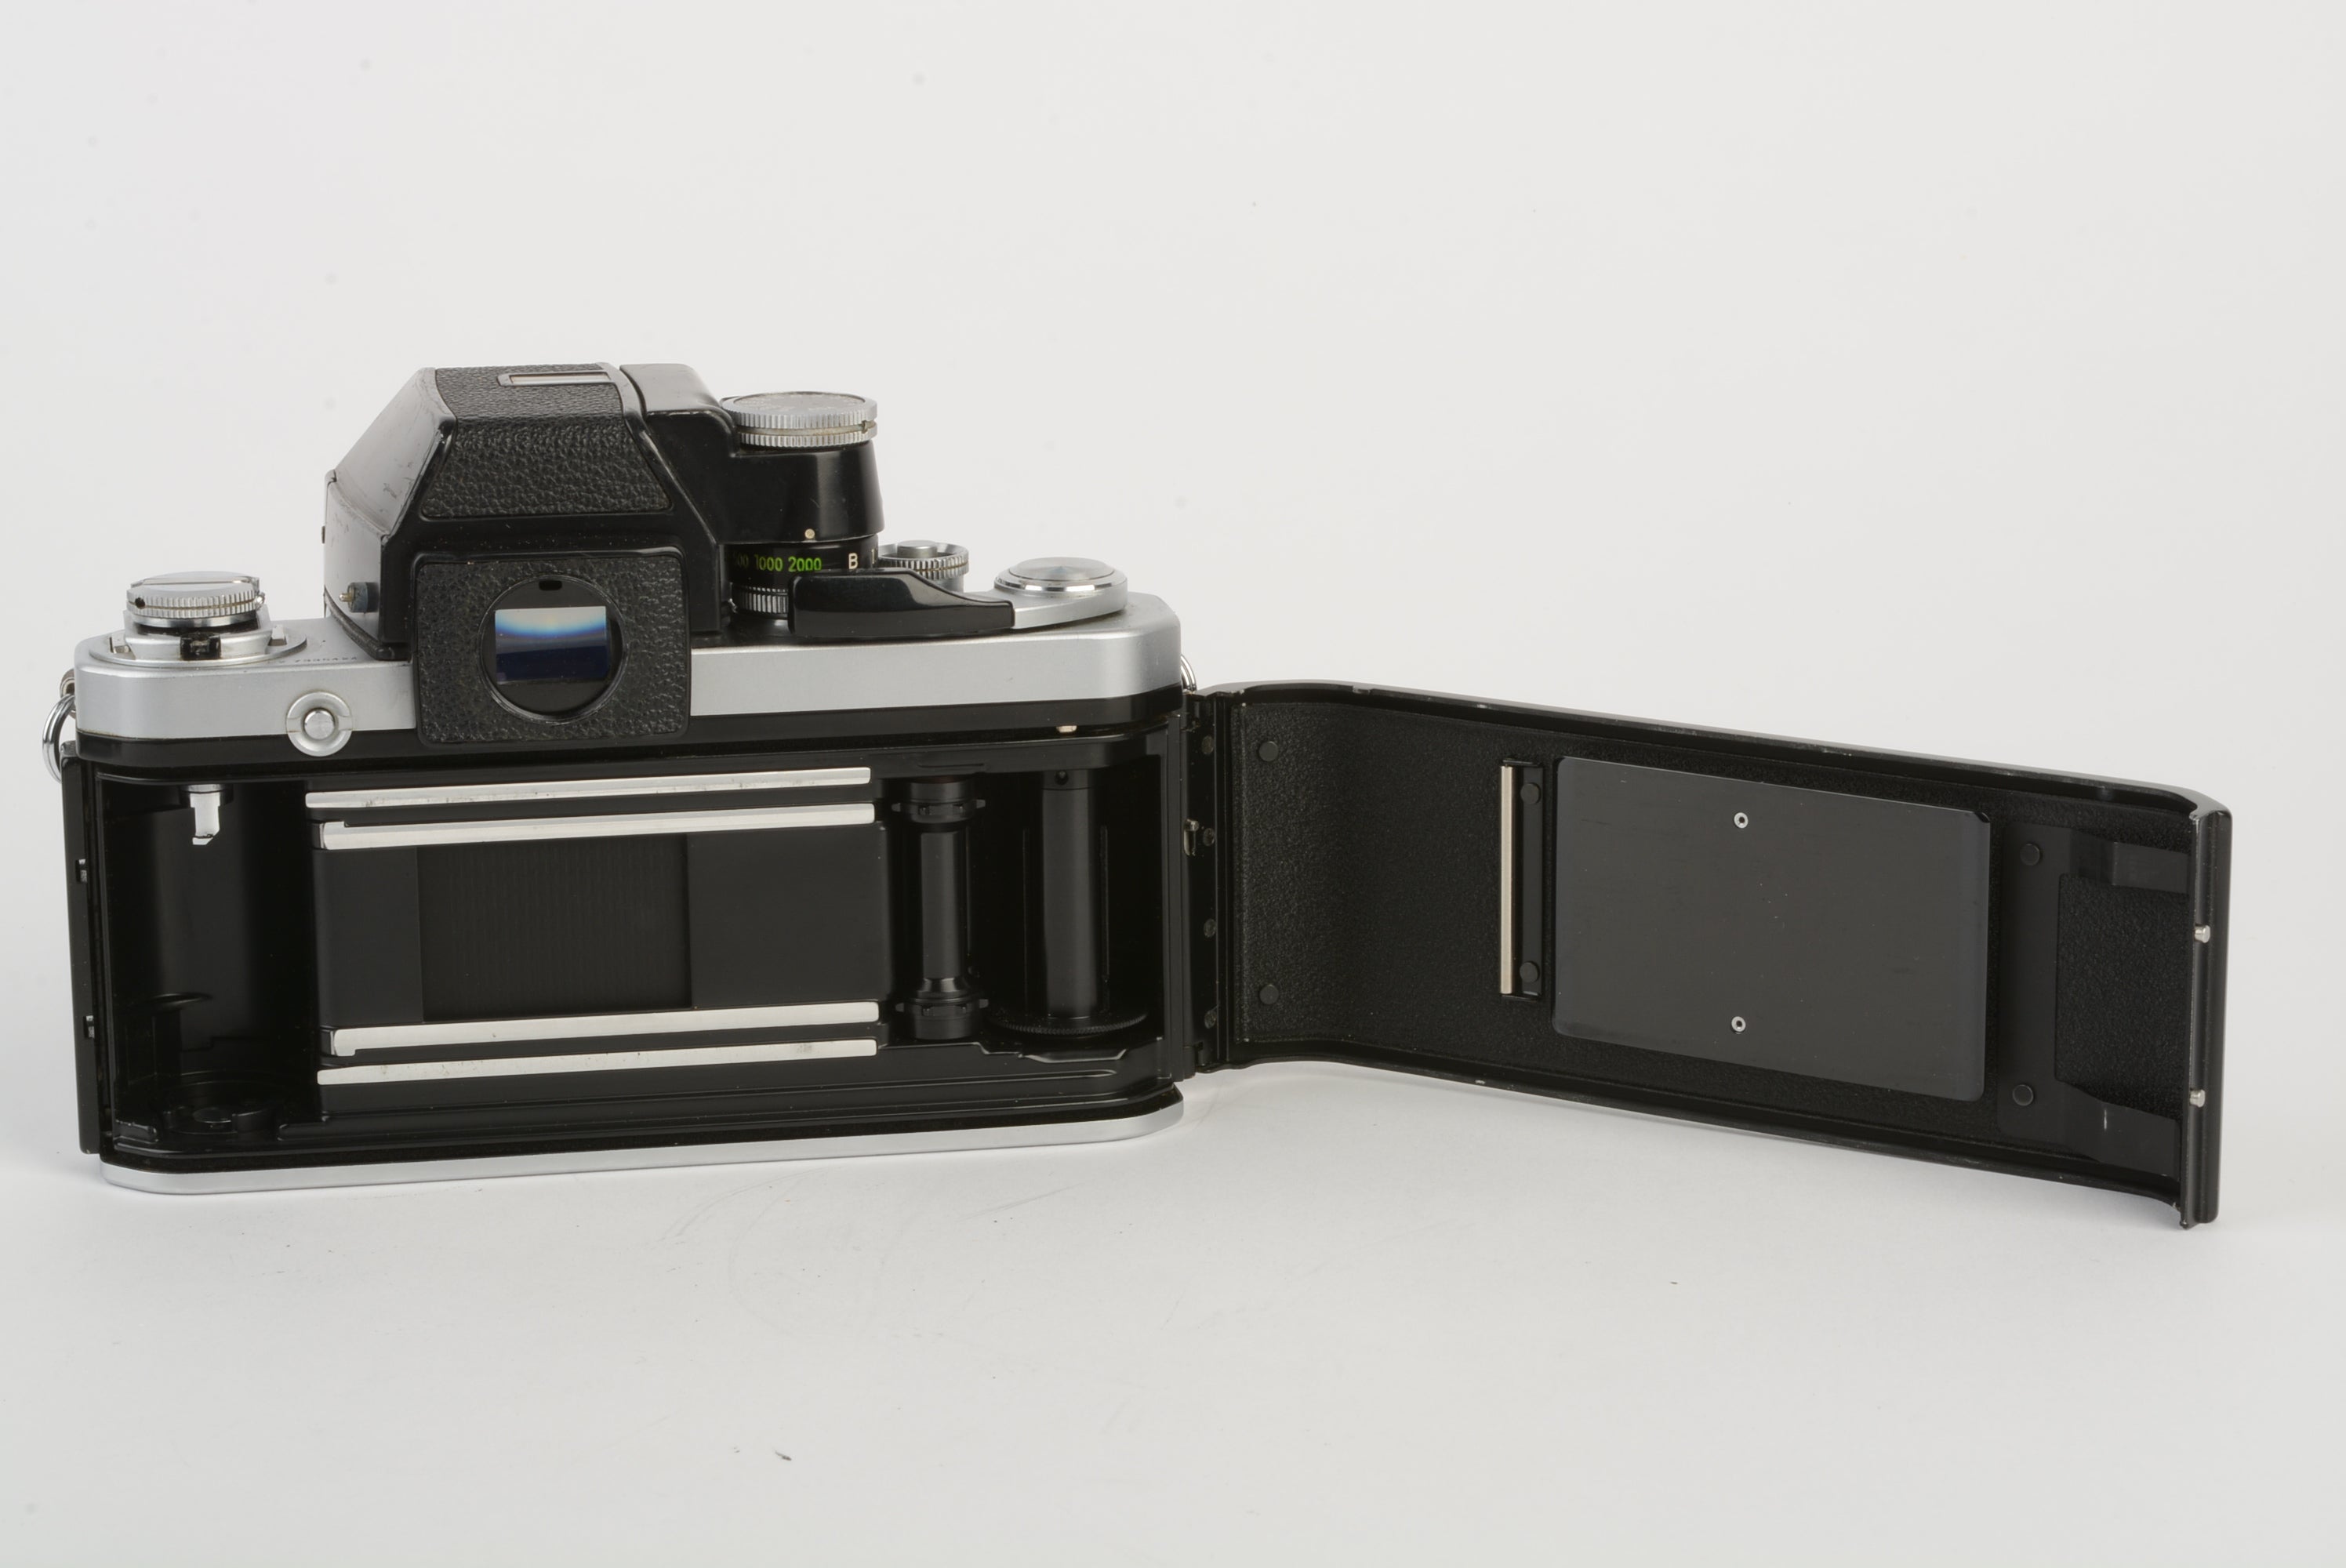 Nikon F2 フォトミック DP-1 シルバーボディ ニコン - フィルムカメラ